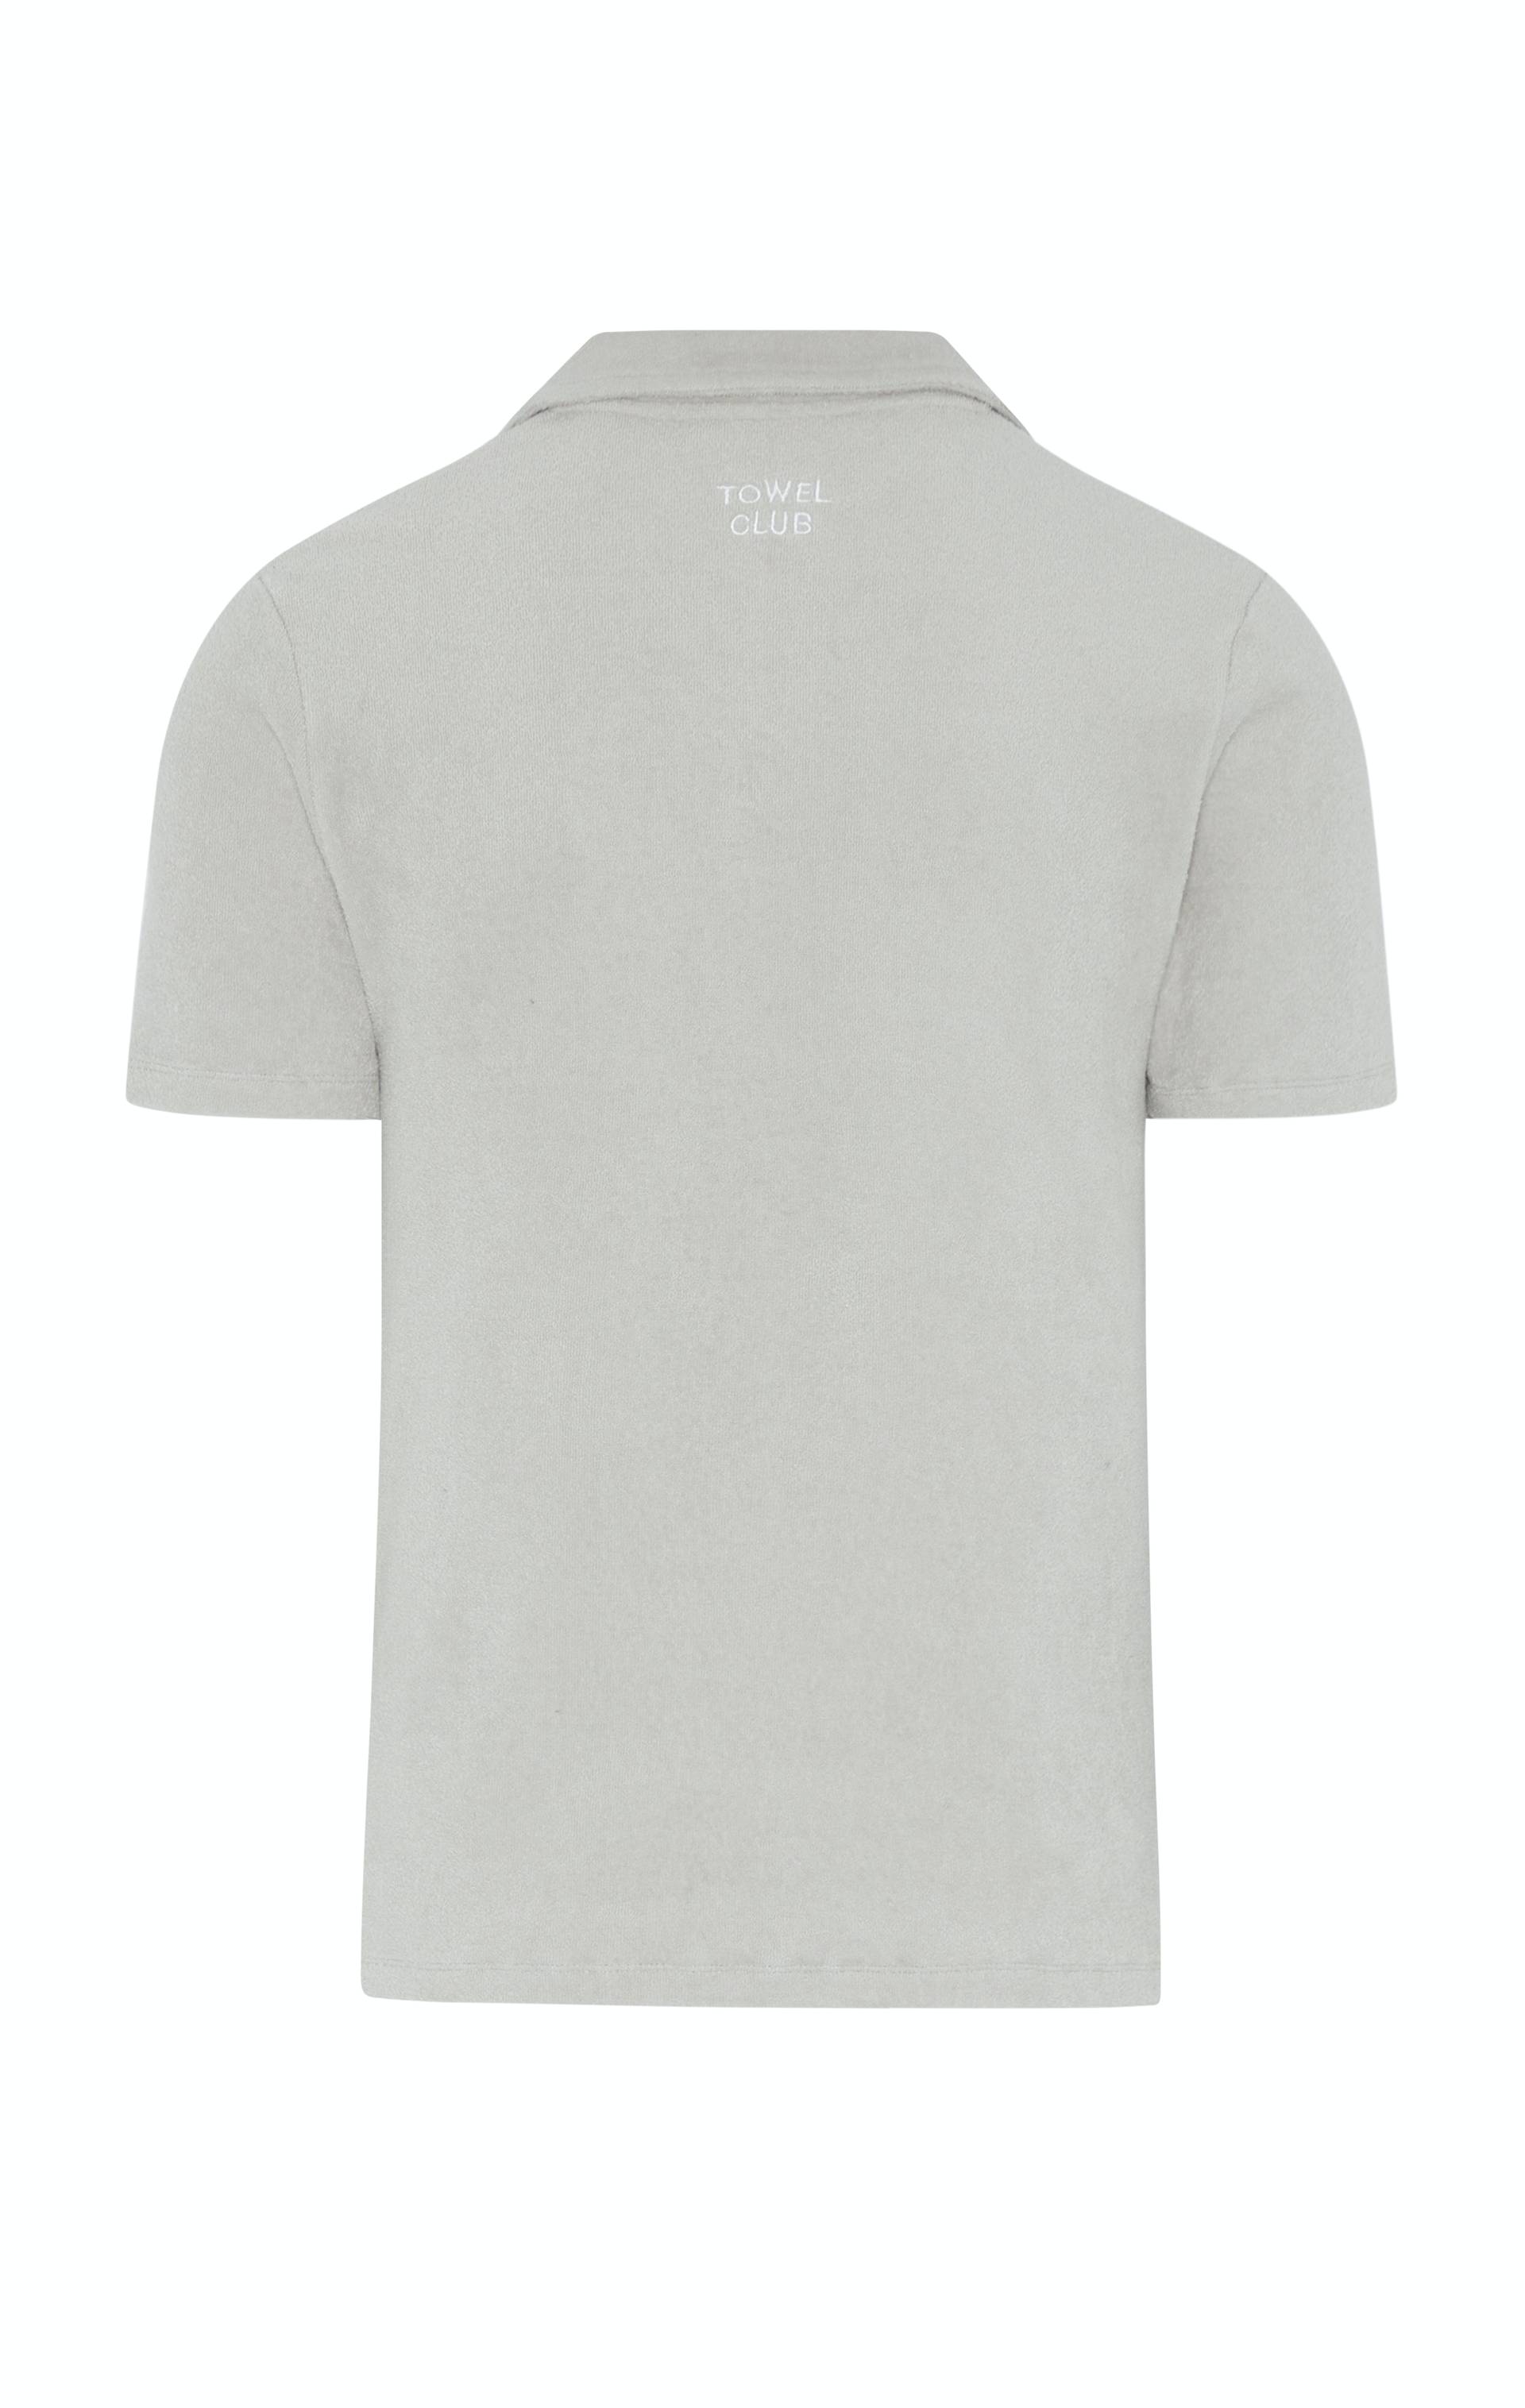 Onepiece Towel Club Piquet Shirt Light Grey - 2